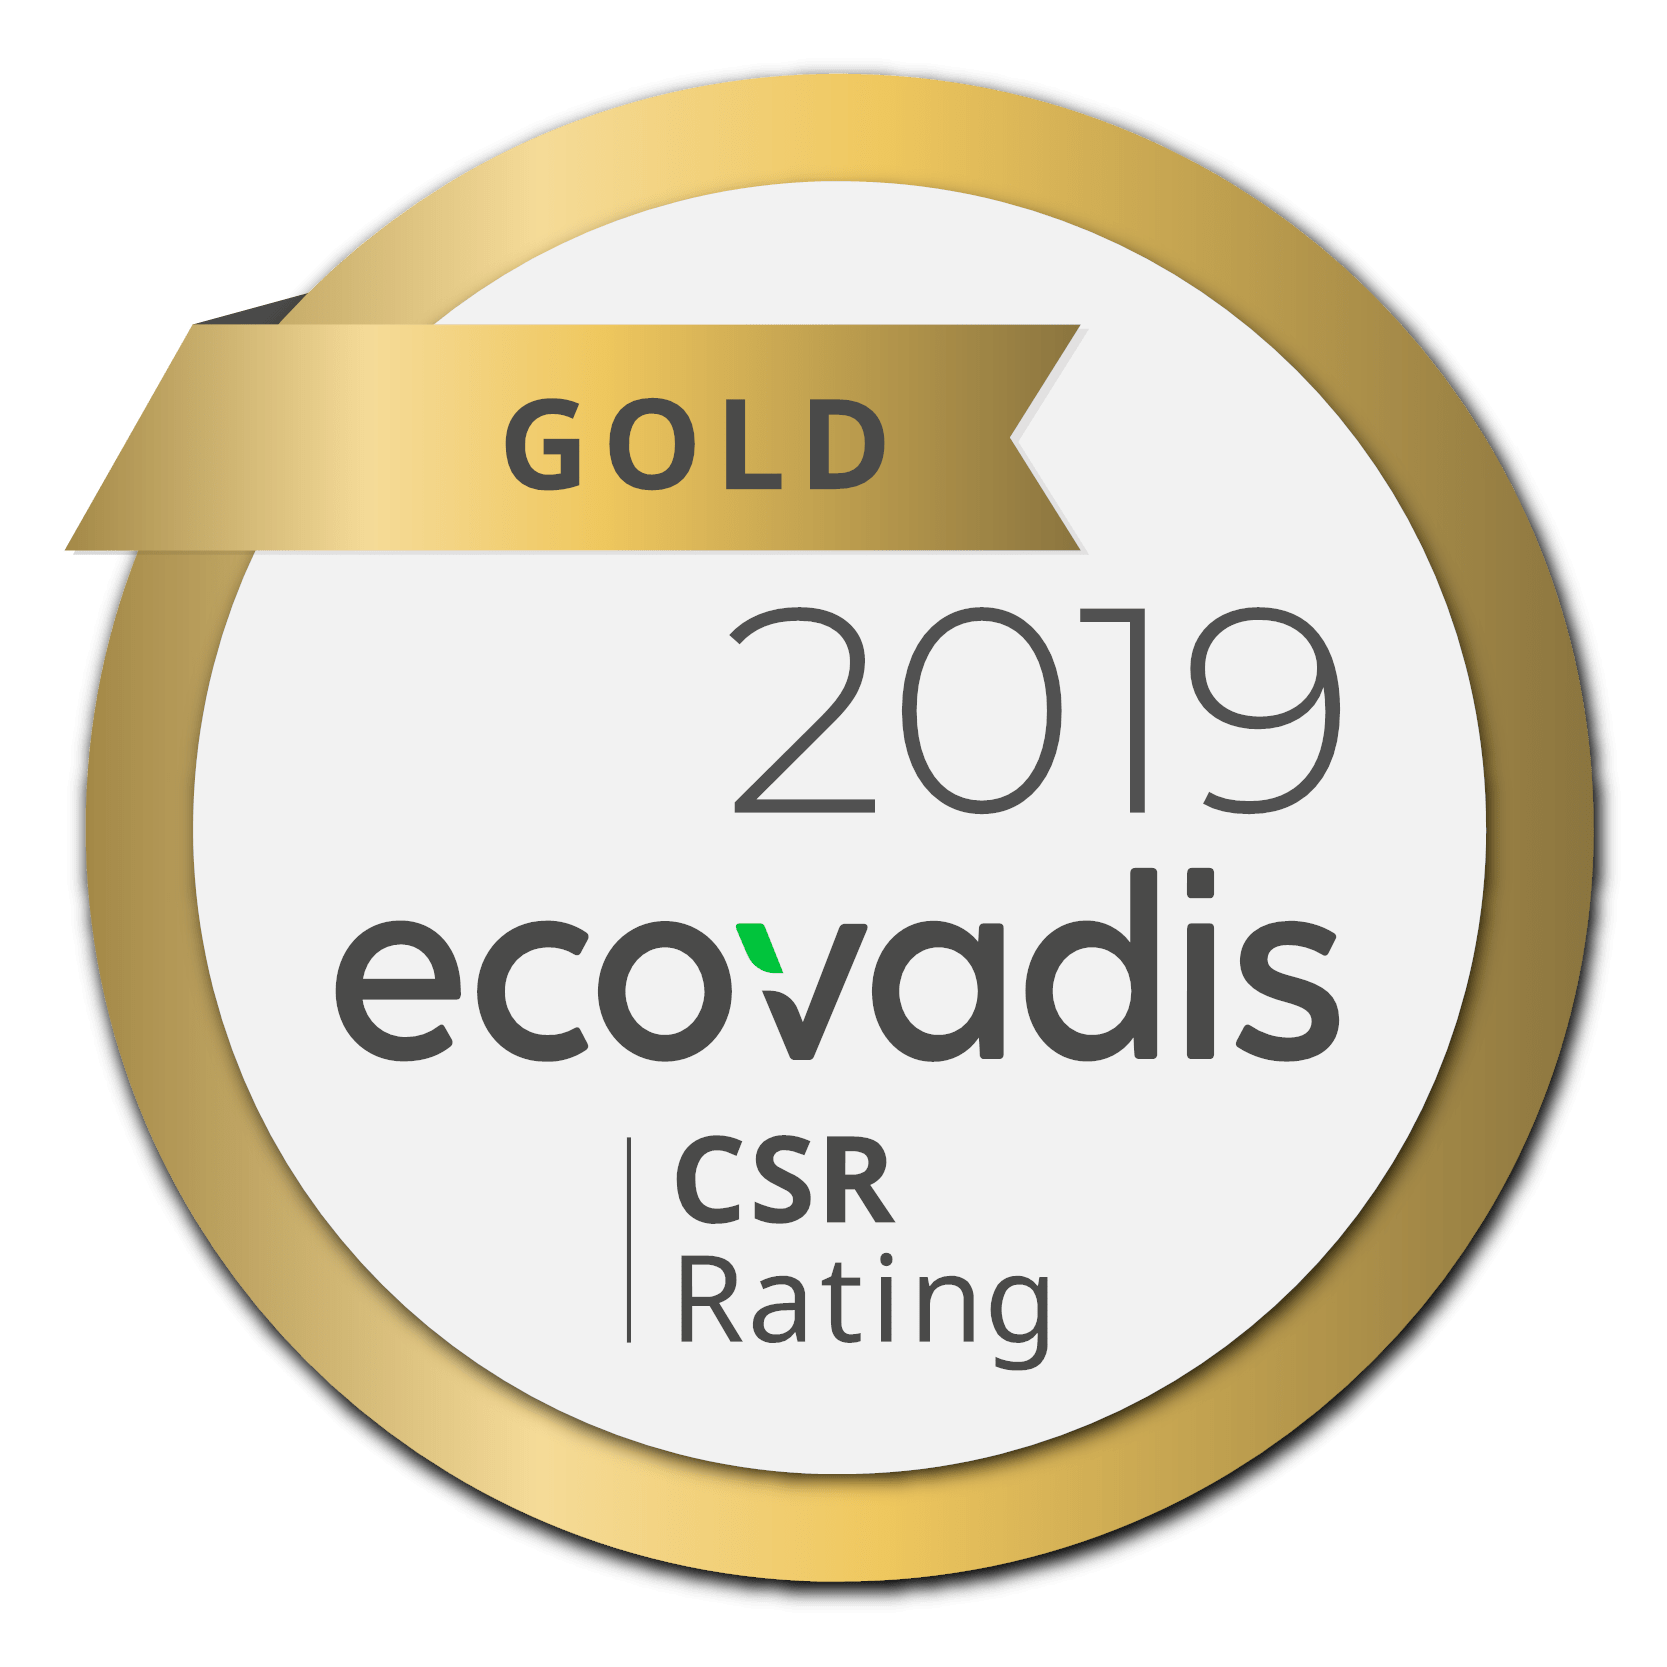 eco-vadis-gold-rating-1